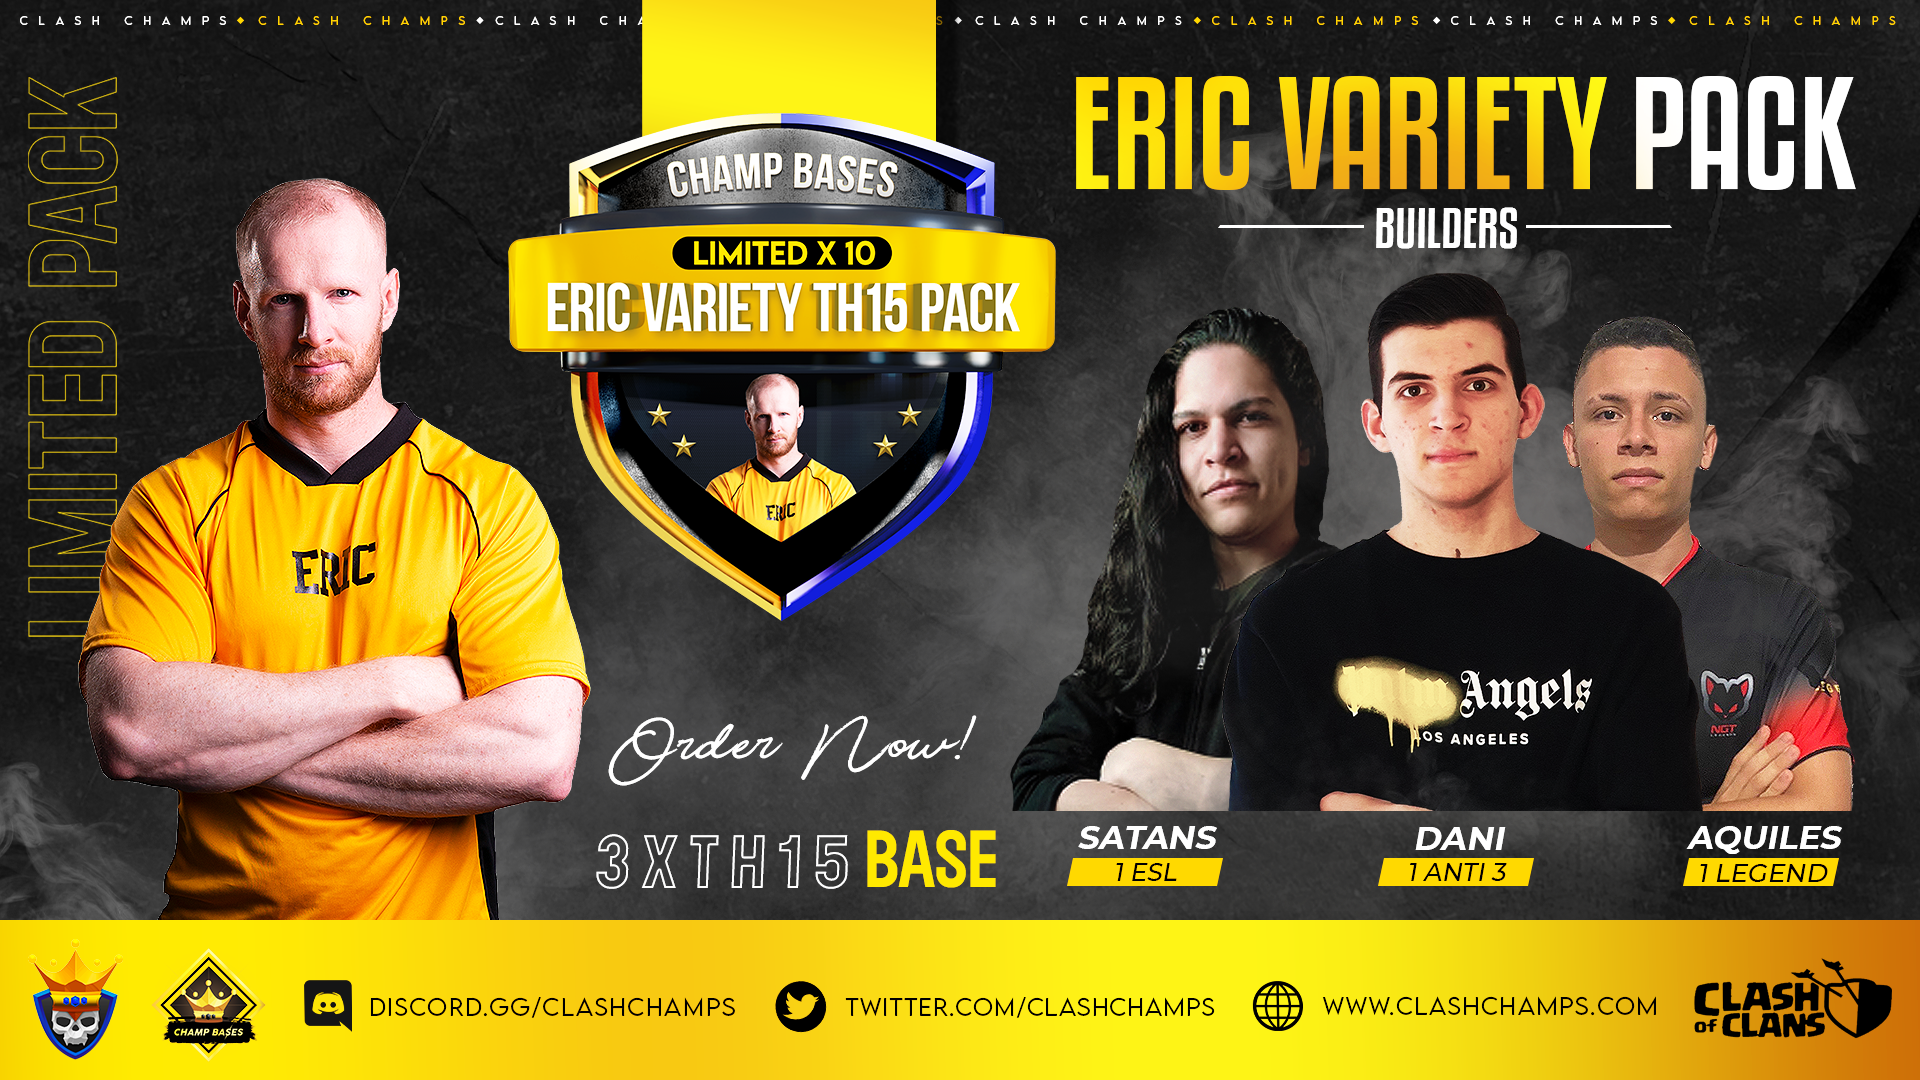 Eric-pro-base-pack-limited